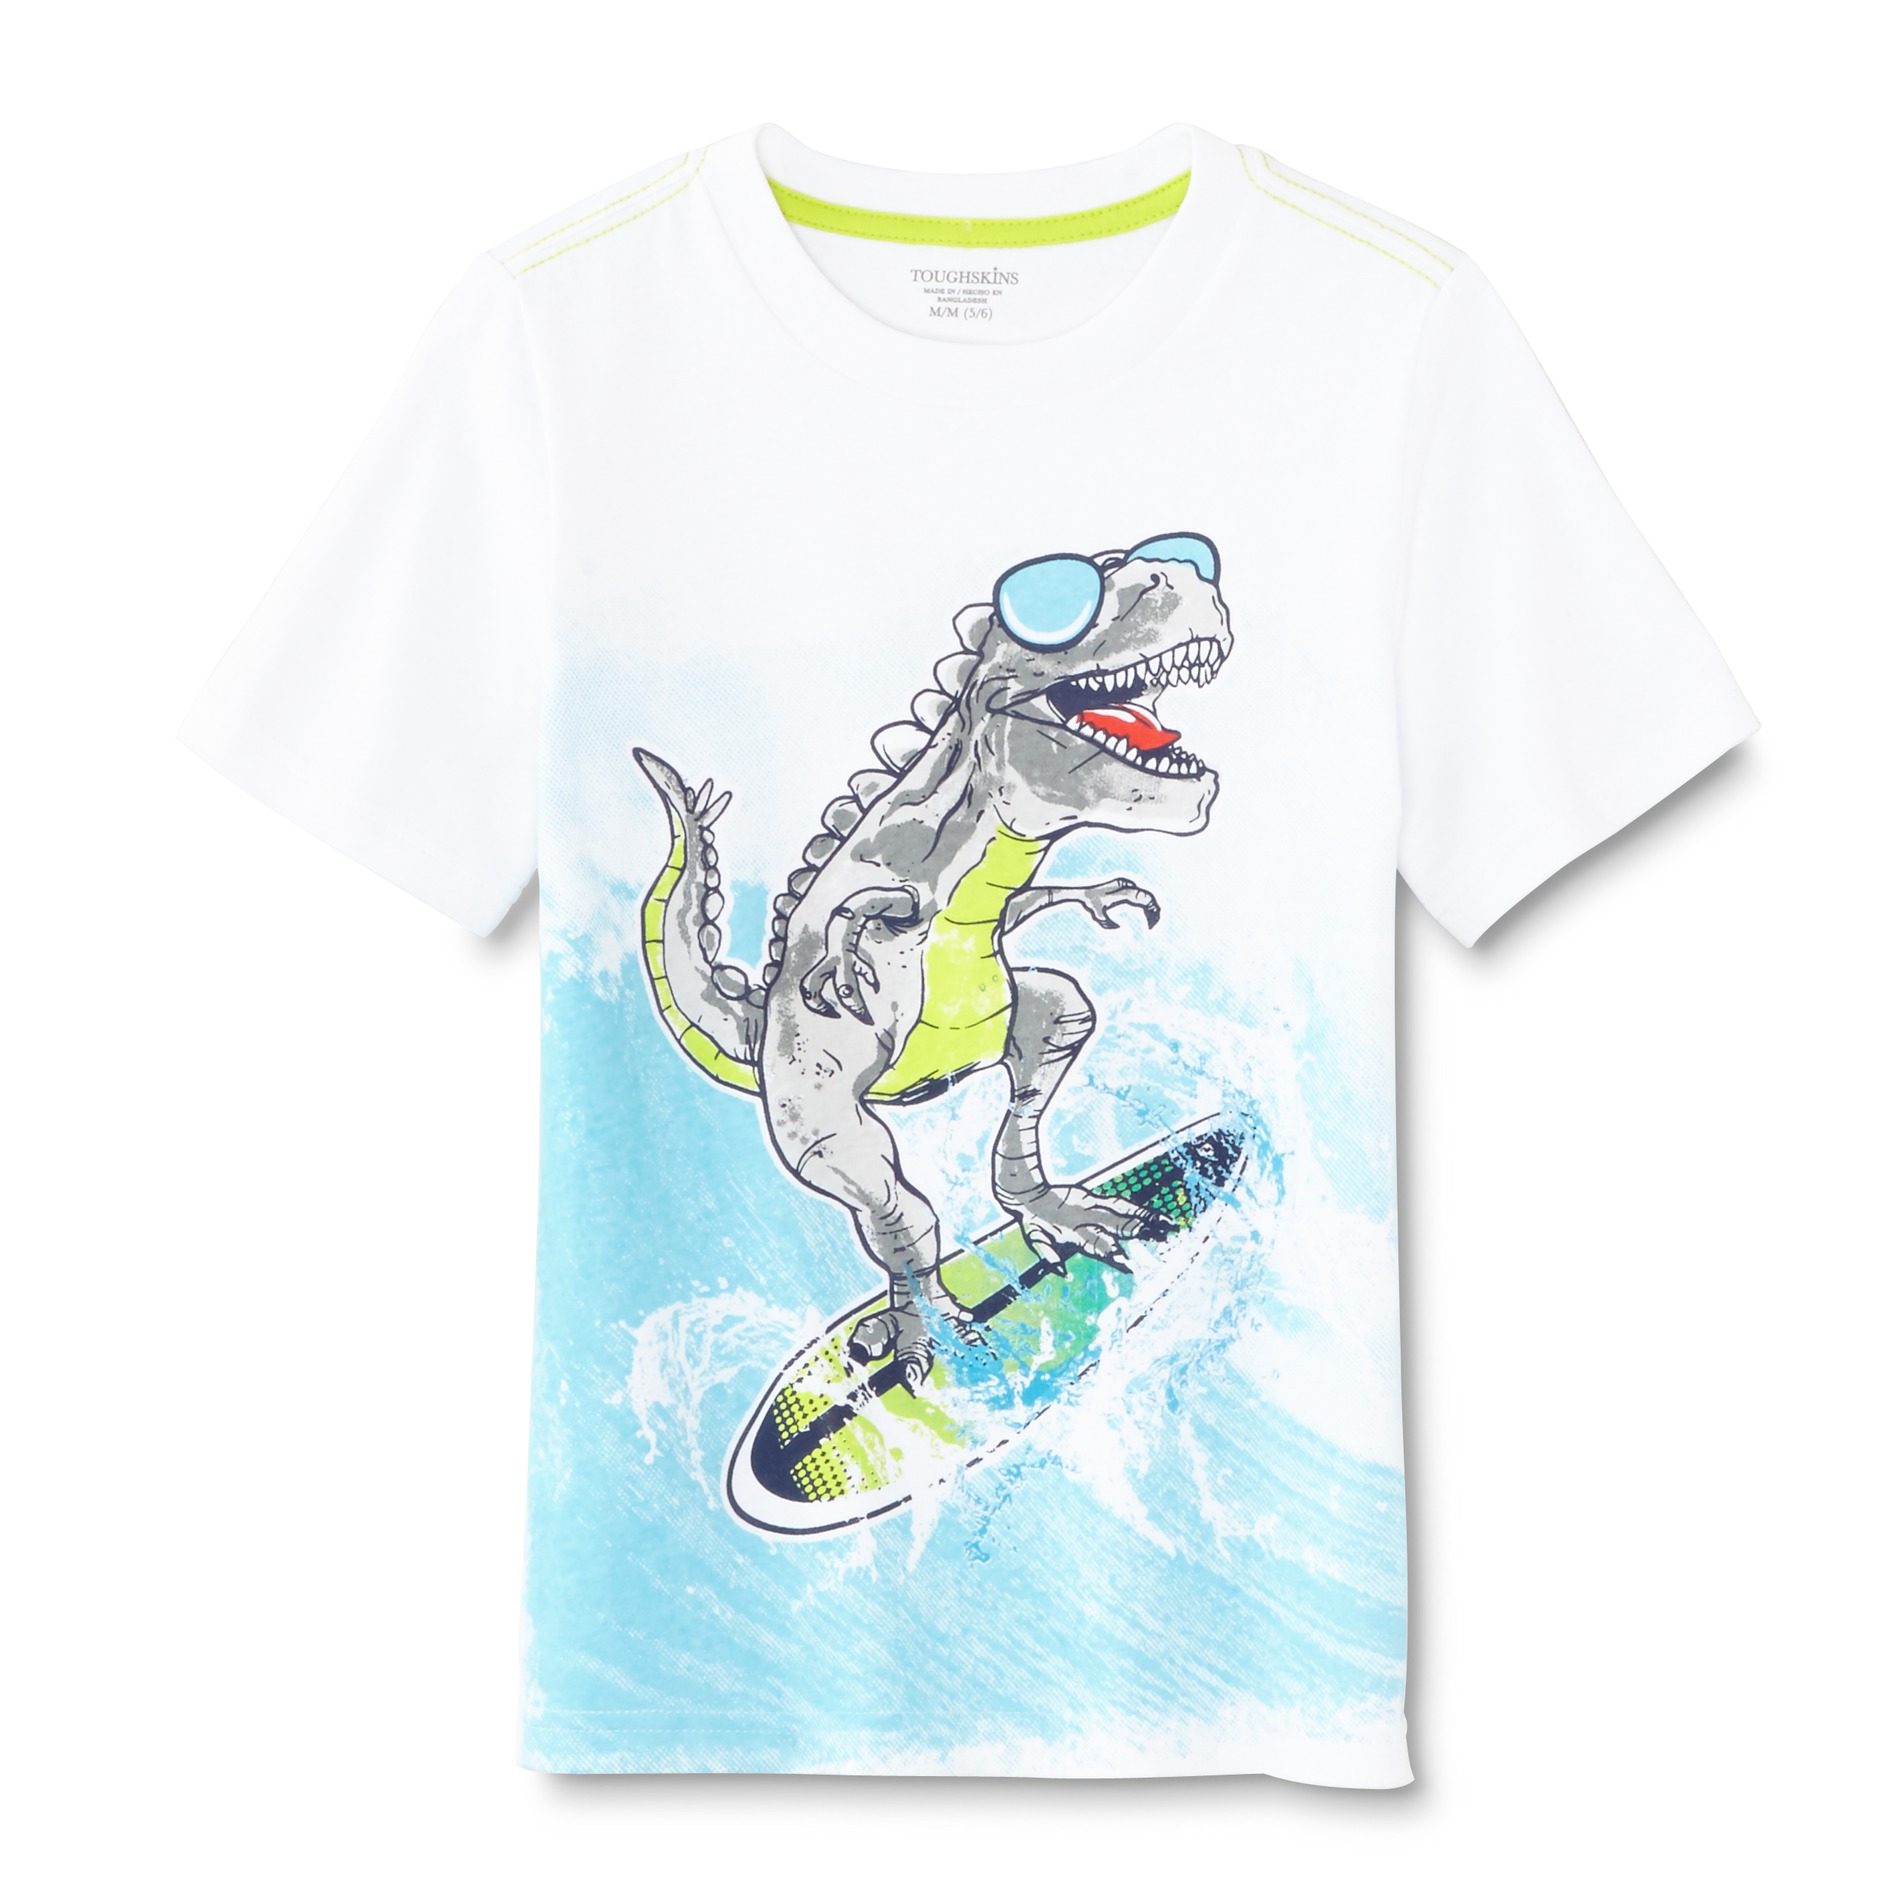 Toughskins Infant & Toddler Boy's Graphic T-Shirt - T. Rex